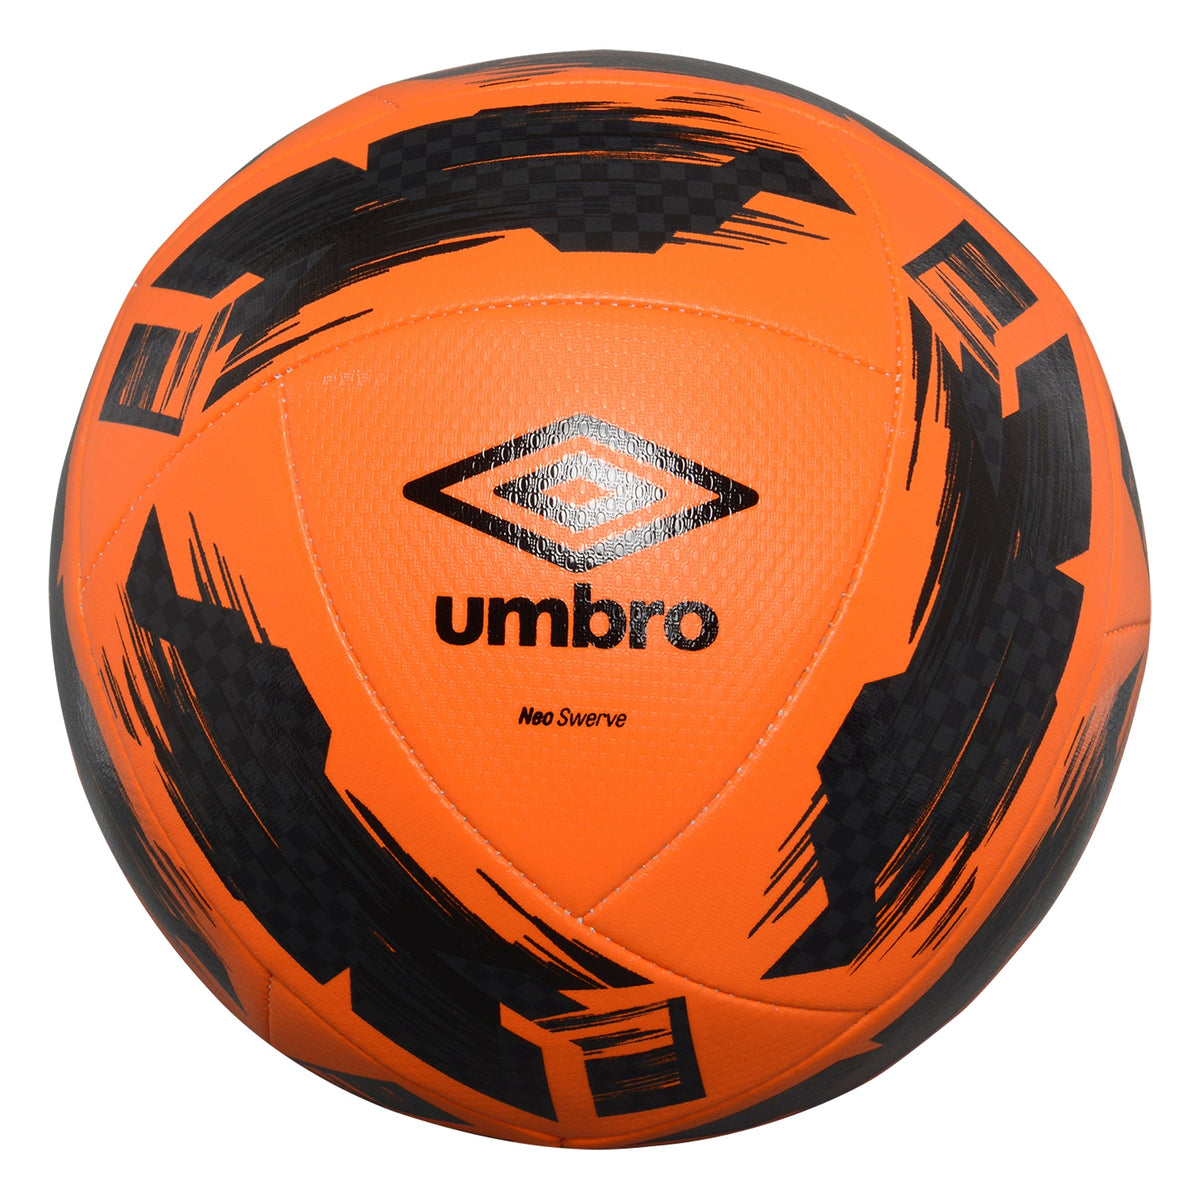 Umbro Neo Swerve Soccer Ball Orange/Black